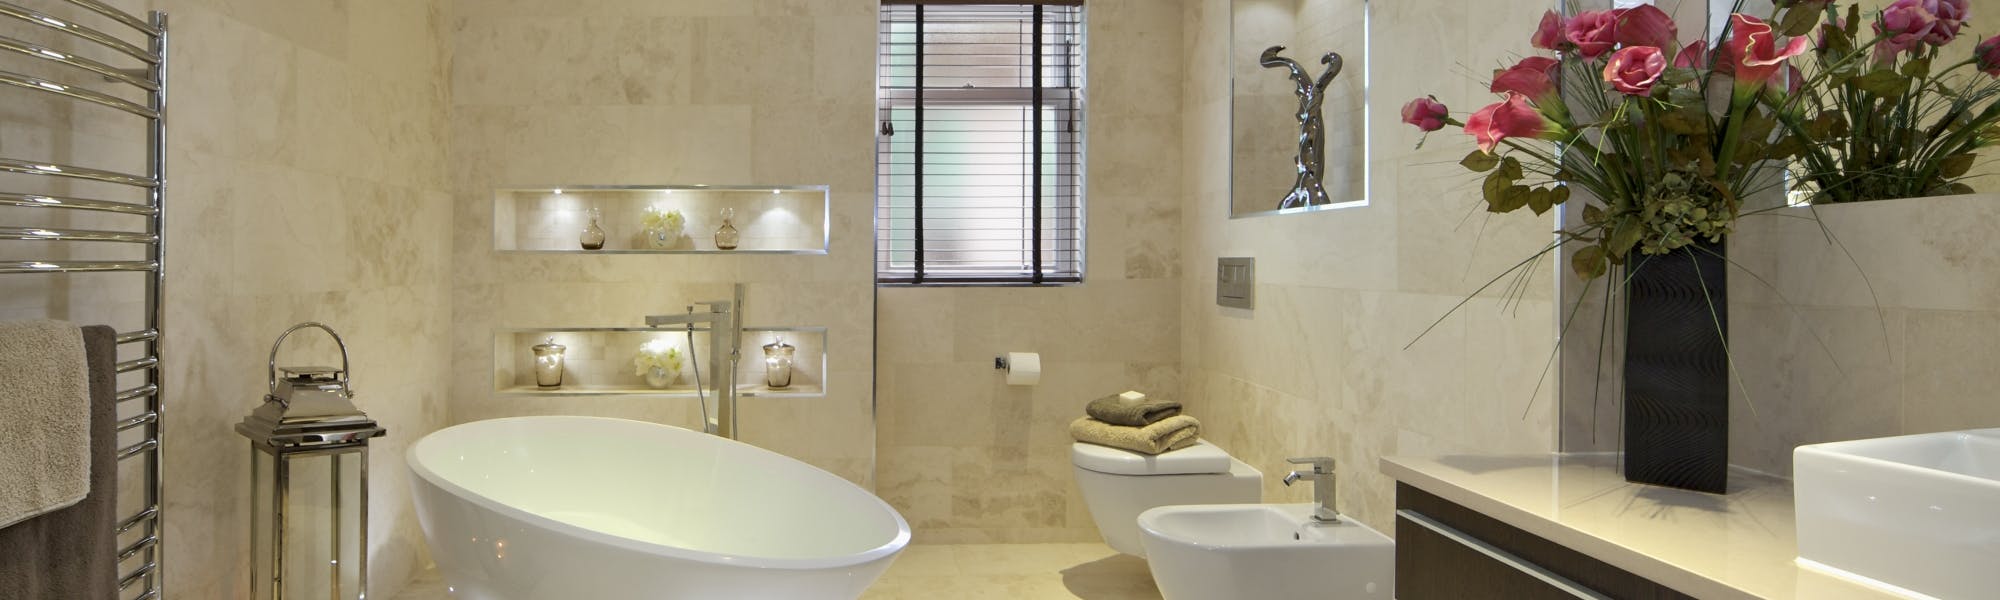 luxury bathrooms - designed, supplied & installed